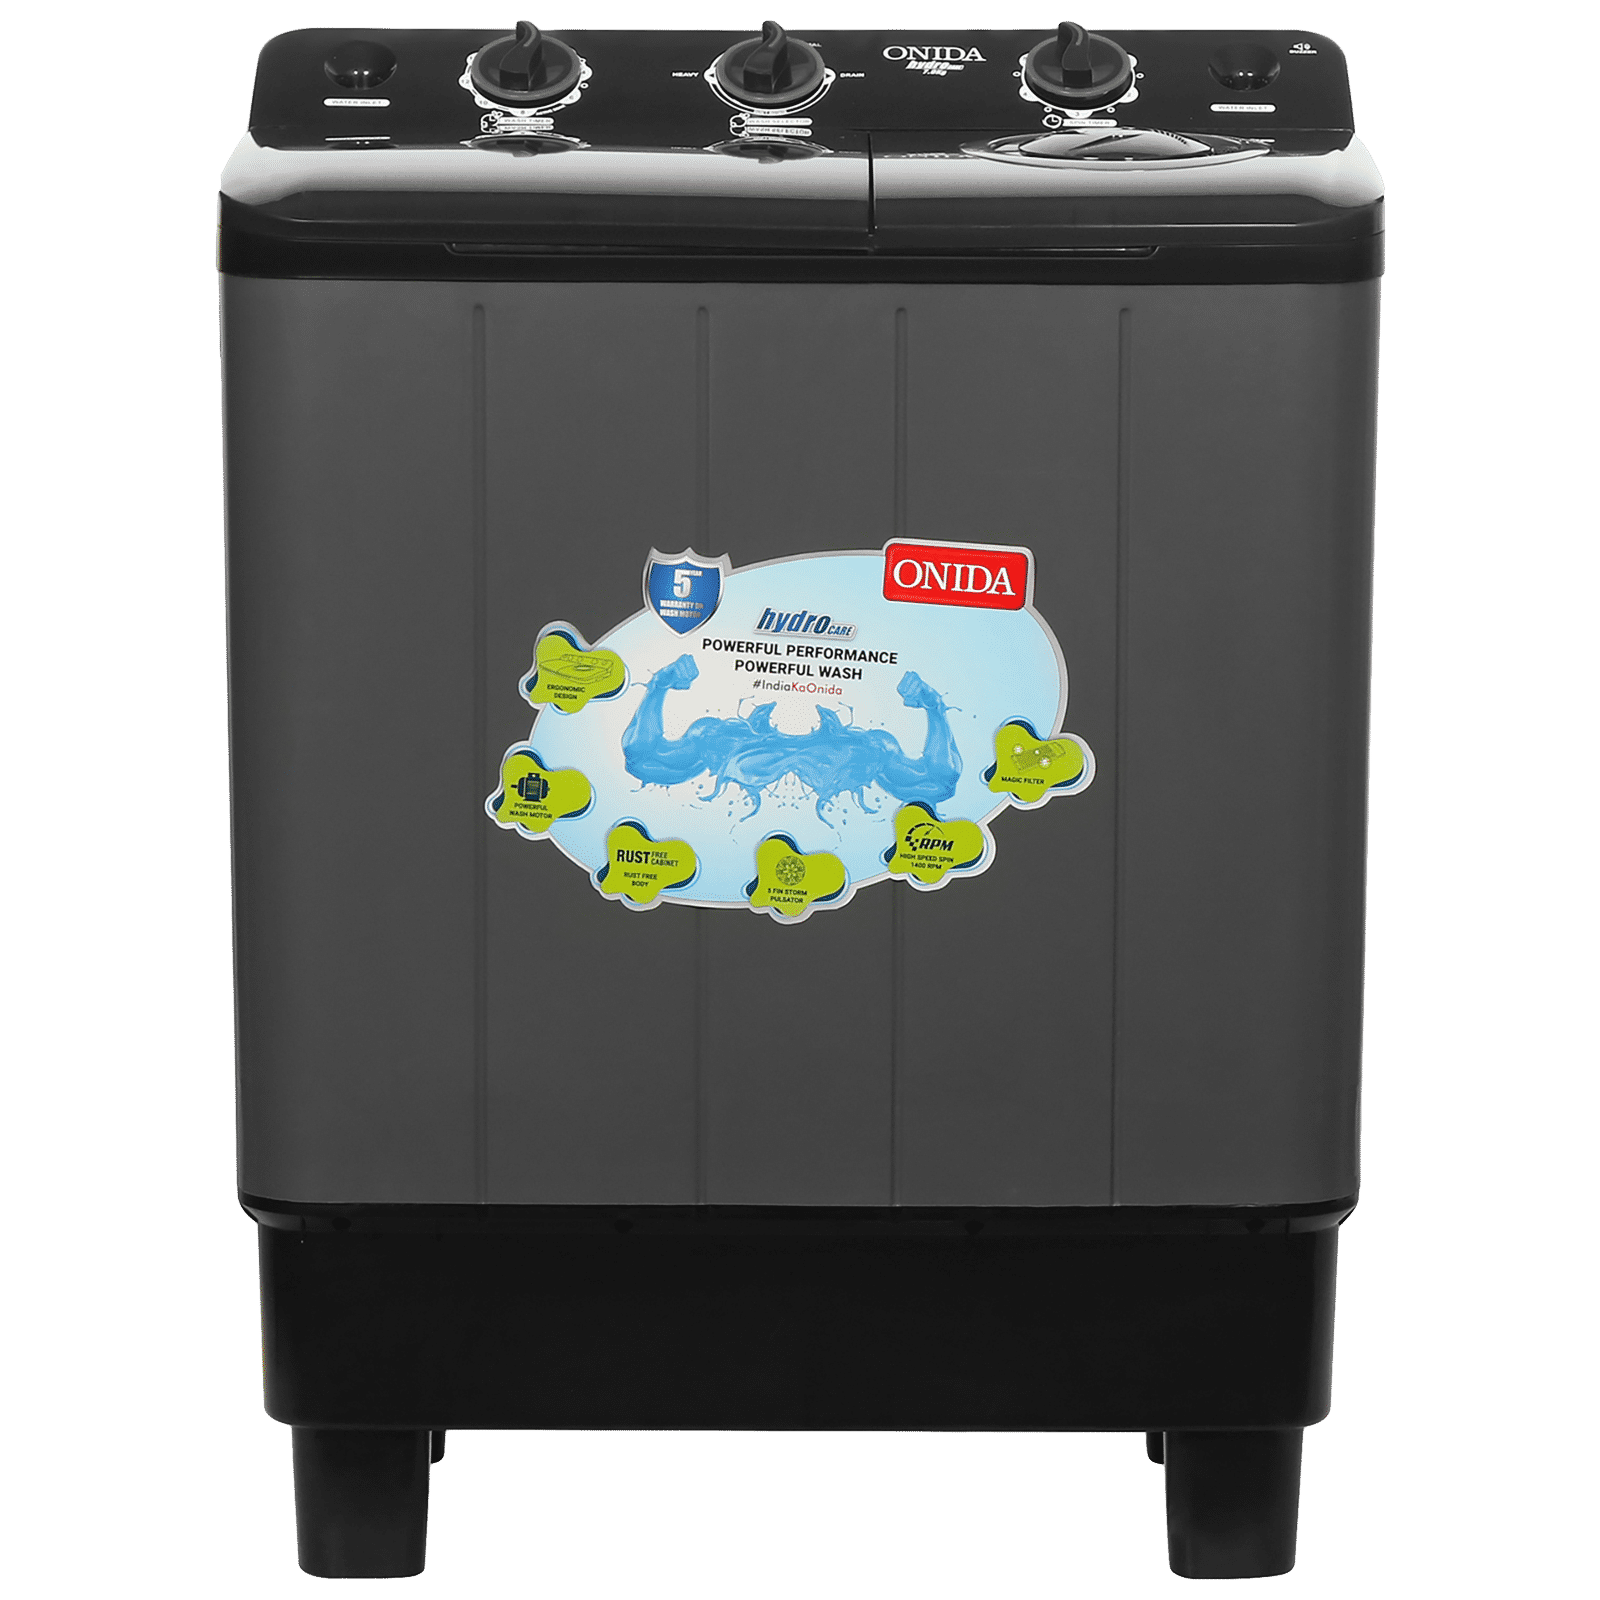 Buy ONIDA 7 kg Semi-Automatic Top Load Washing Machine (S70GR, 5 Spin Storm Pulsator, Black & Grey) Online - Croma